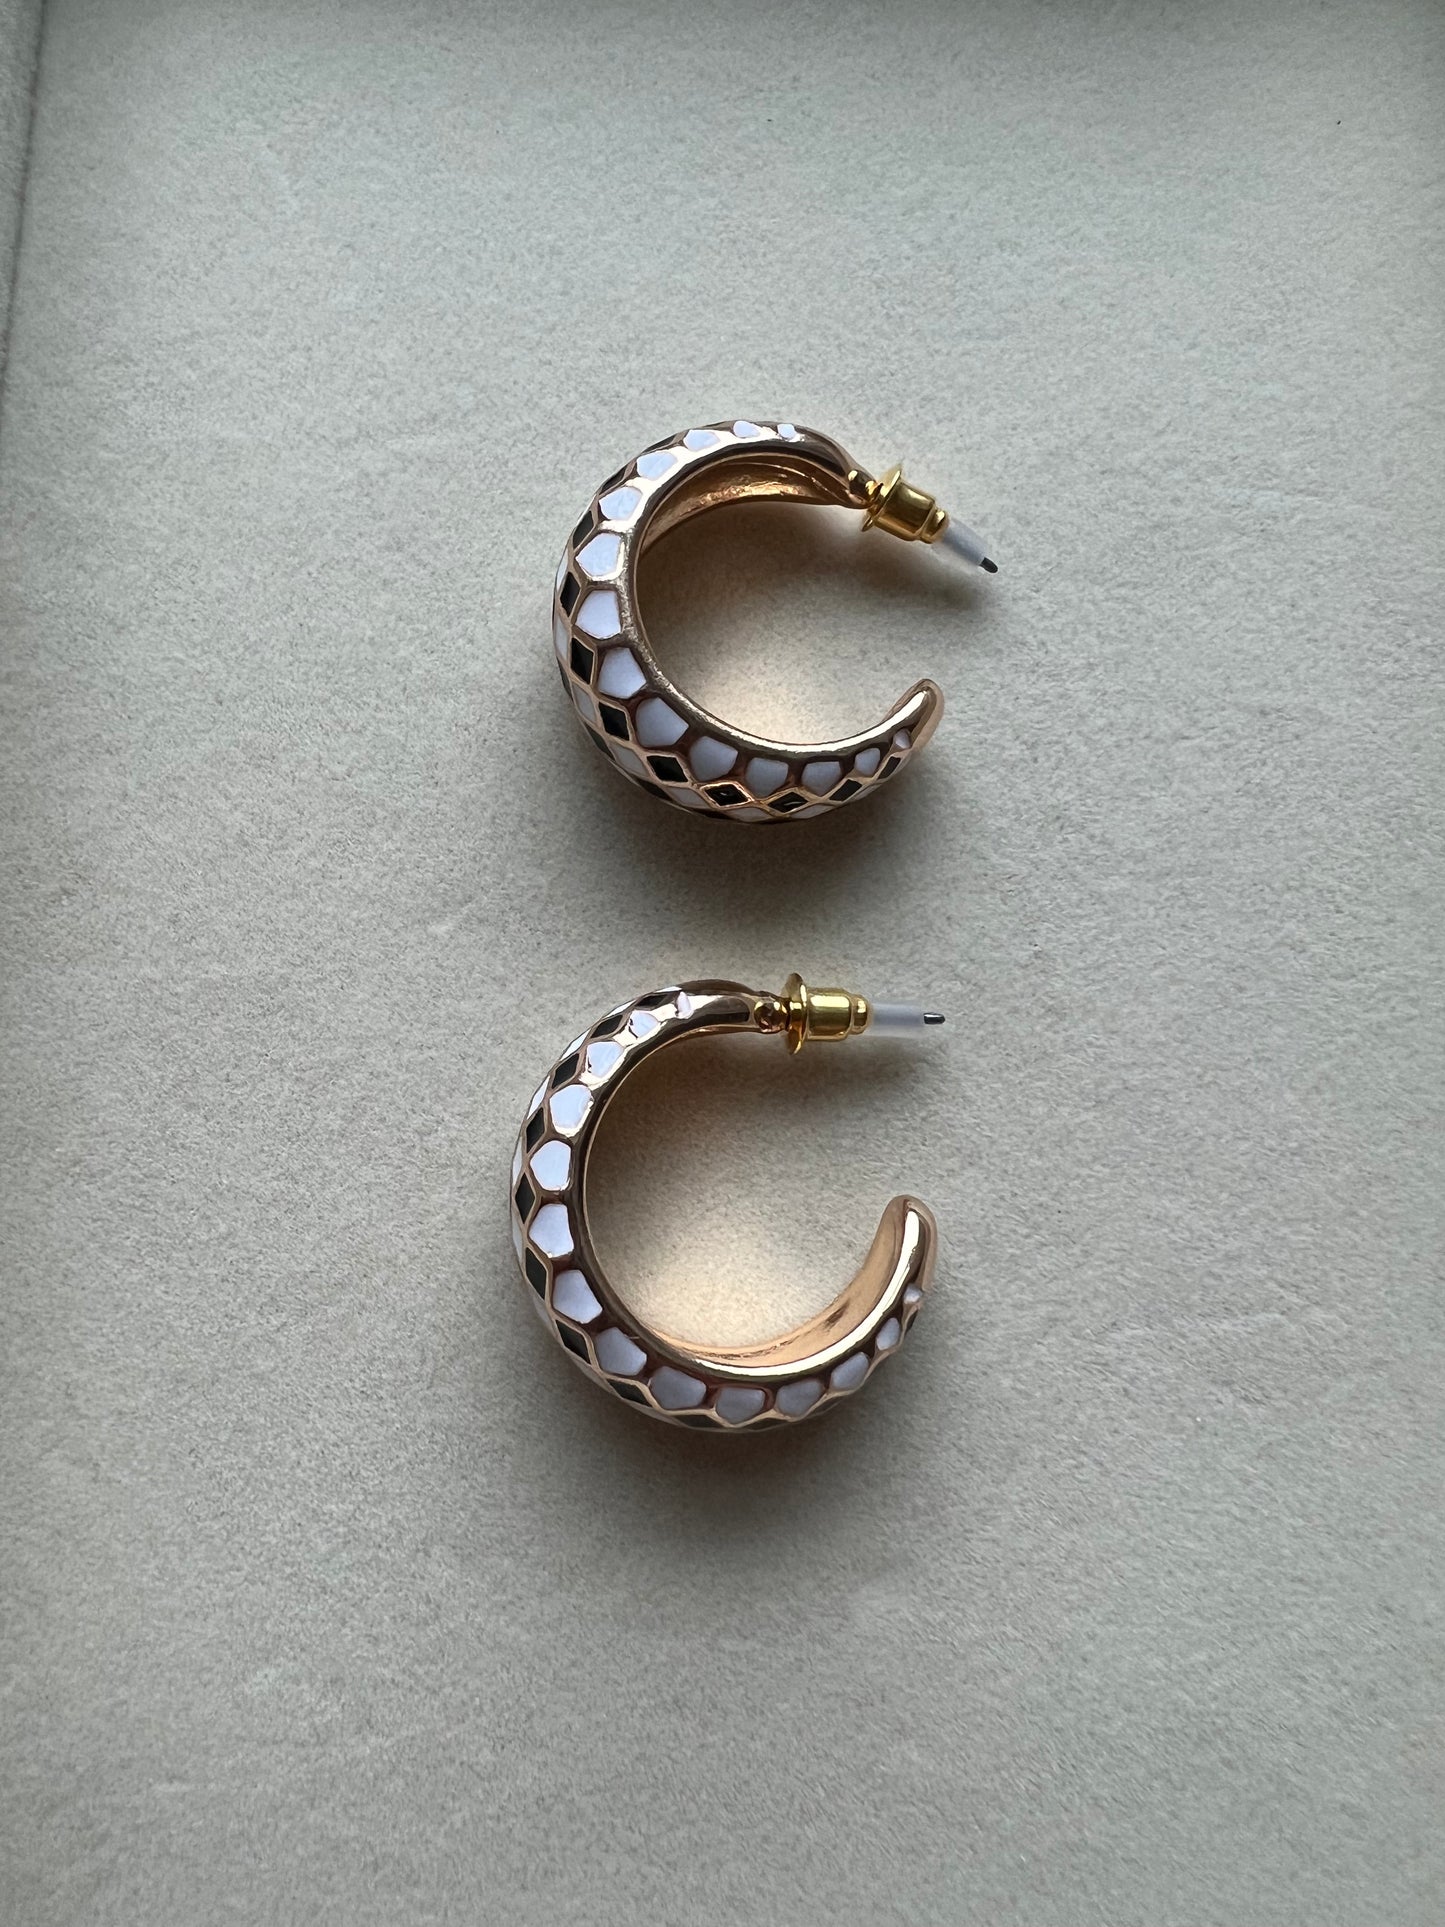 Jenny Checkered Earrings